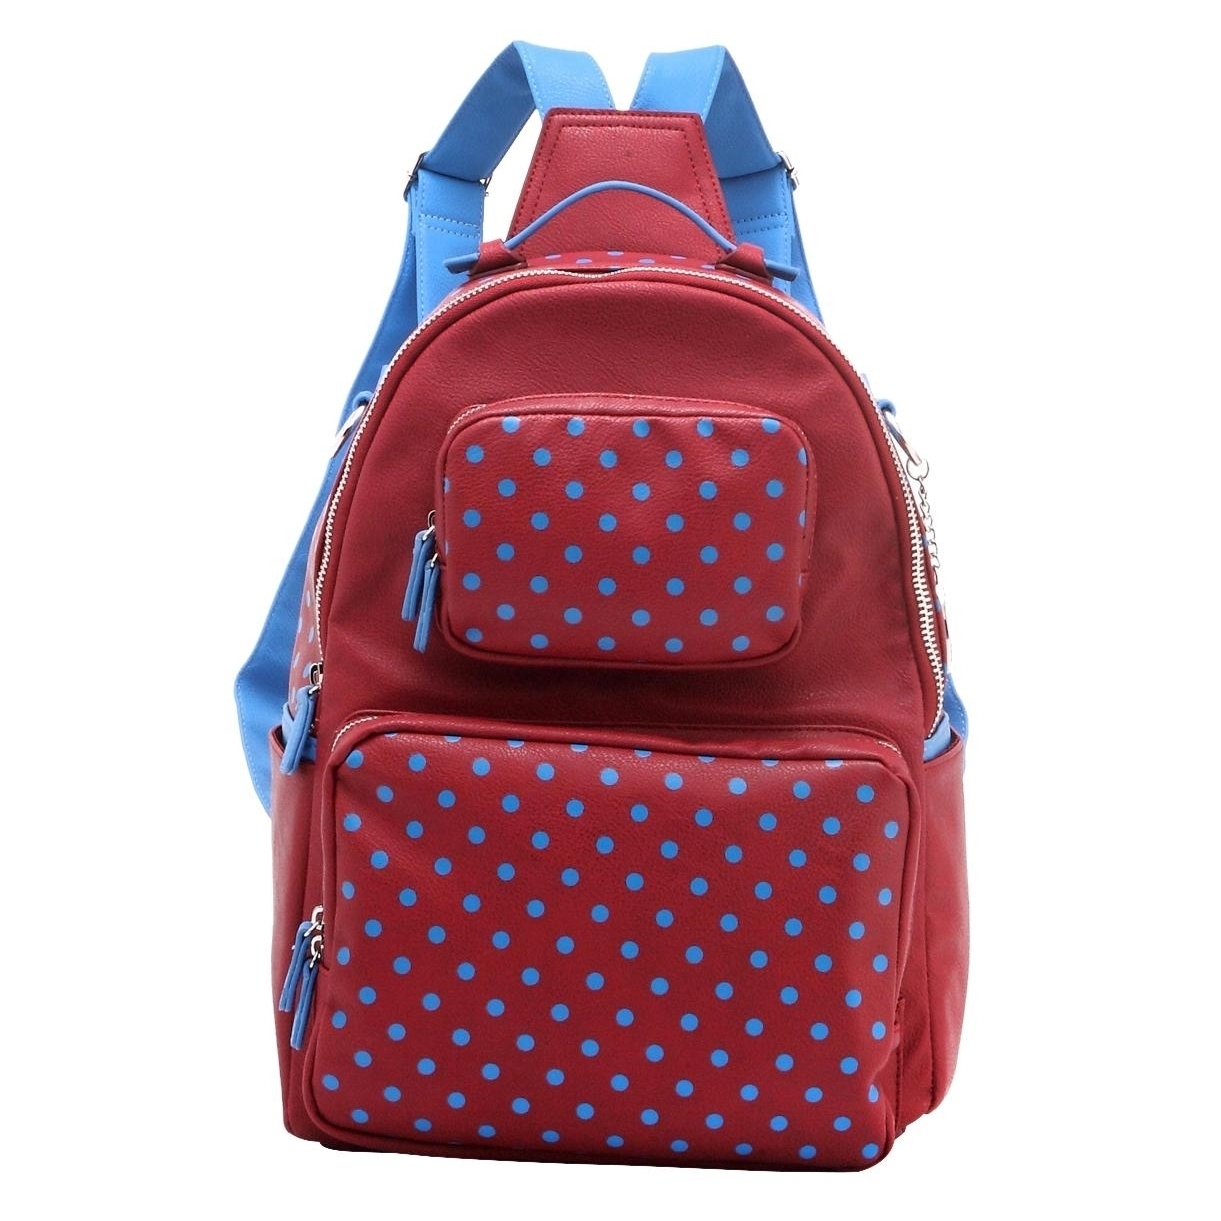 SCORE! Natalie Michelle Medium Polka Dot Designer Backpack - Maroon And French Blue